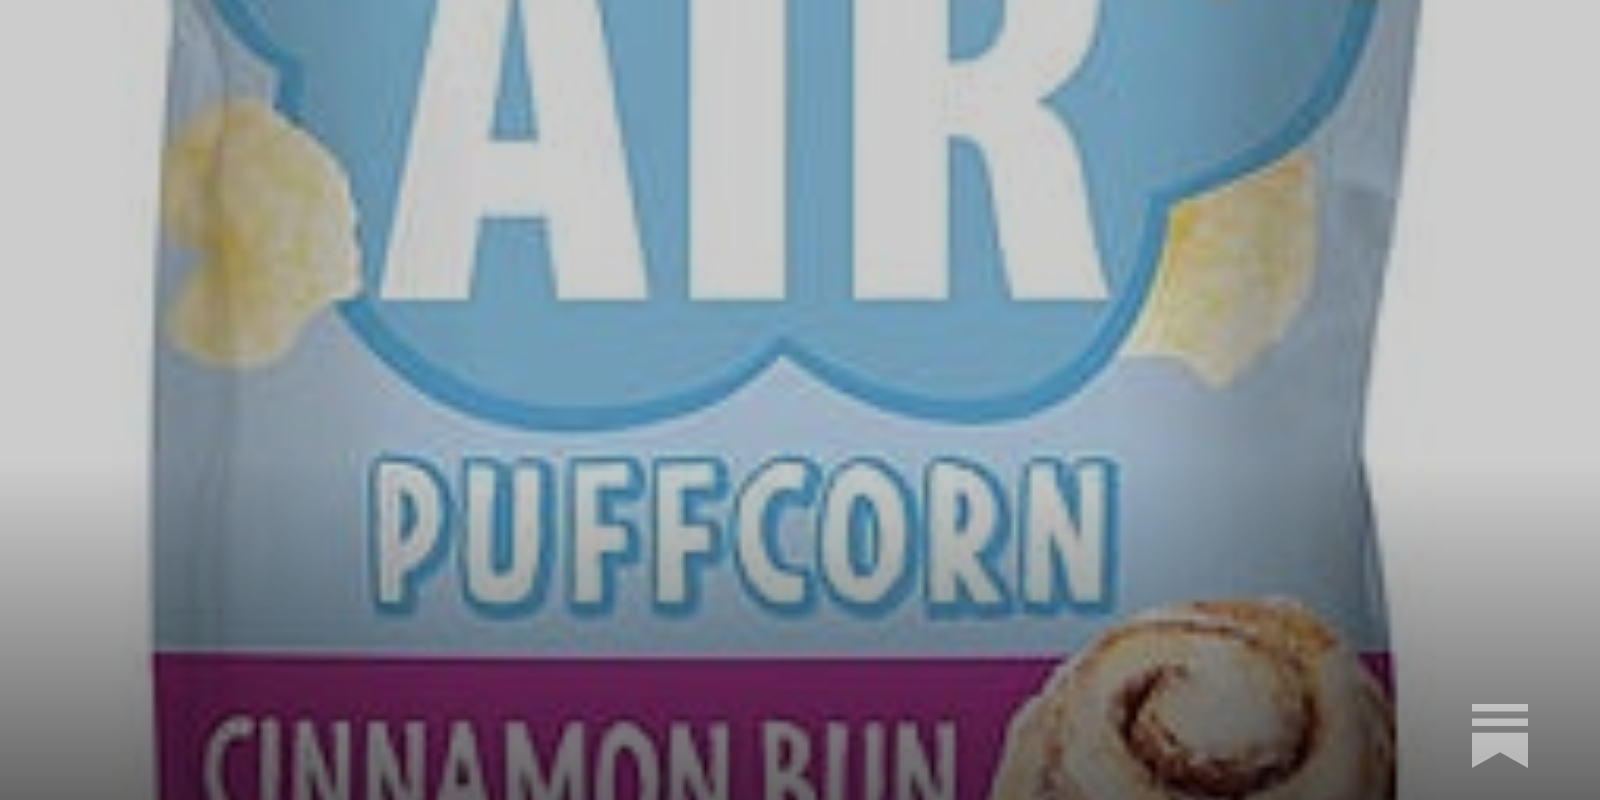 Like Air Cinnamon Bun Puffcorn - 14.0 oz